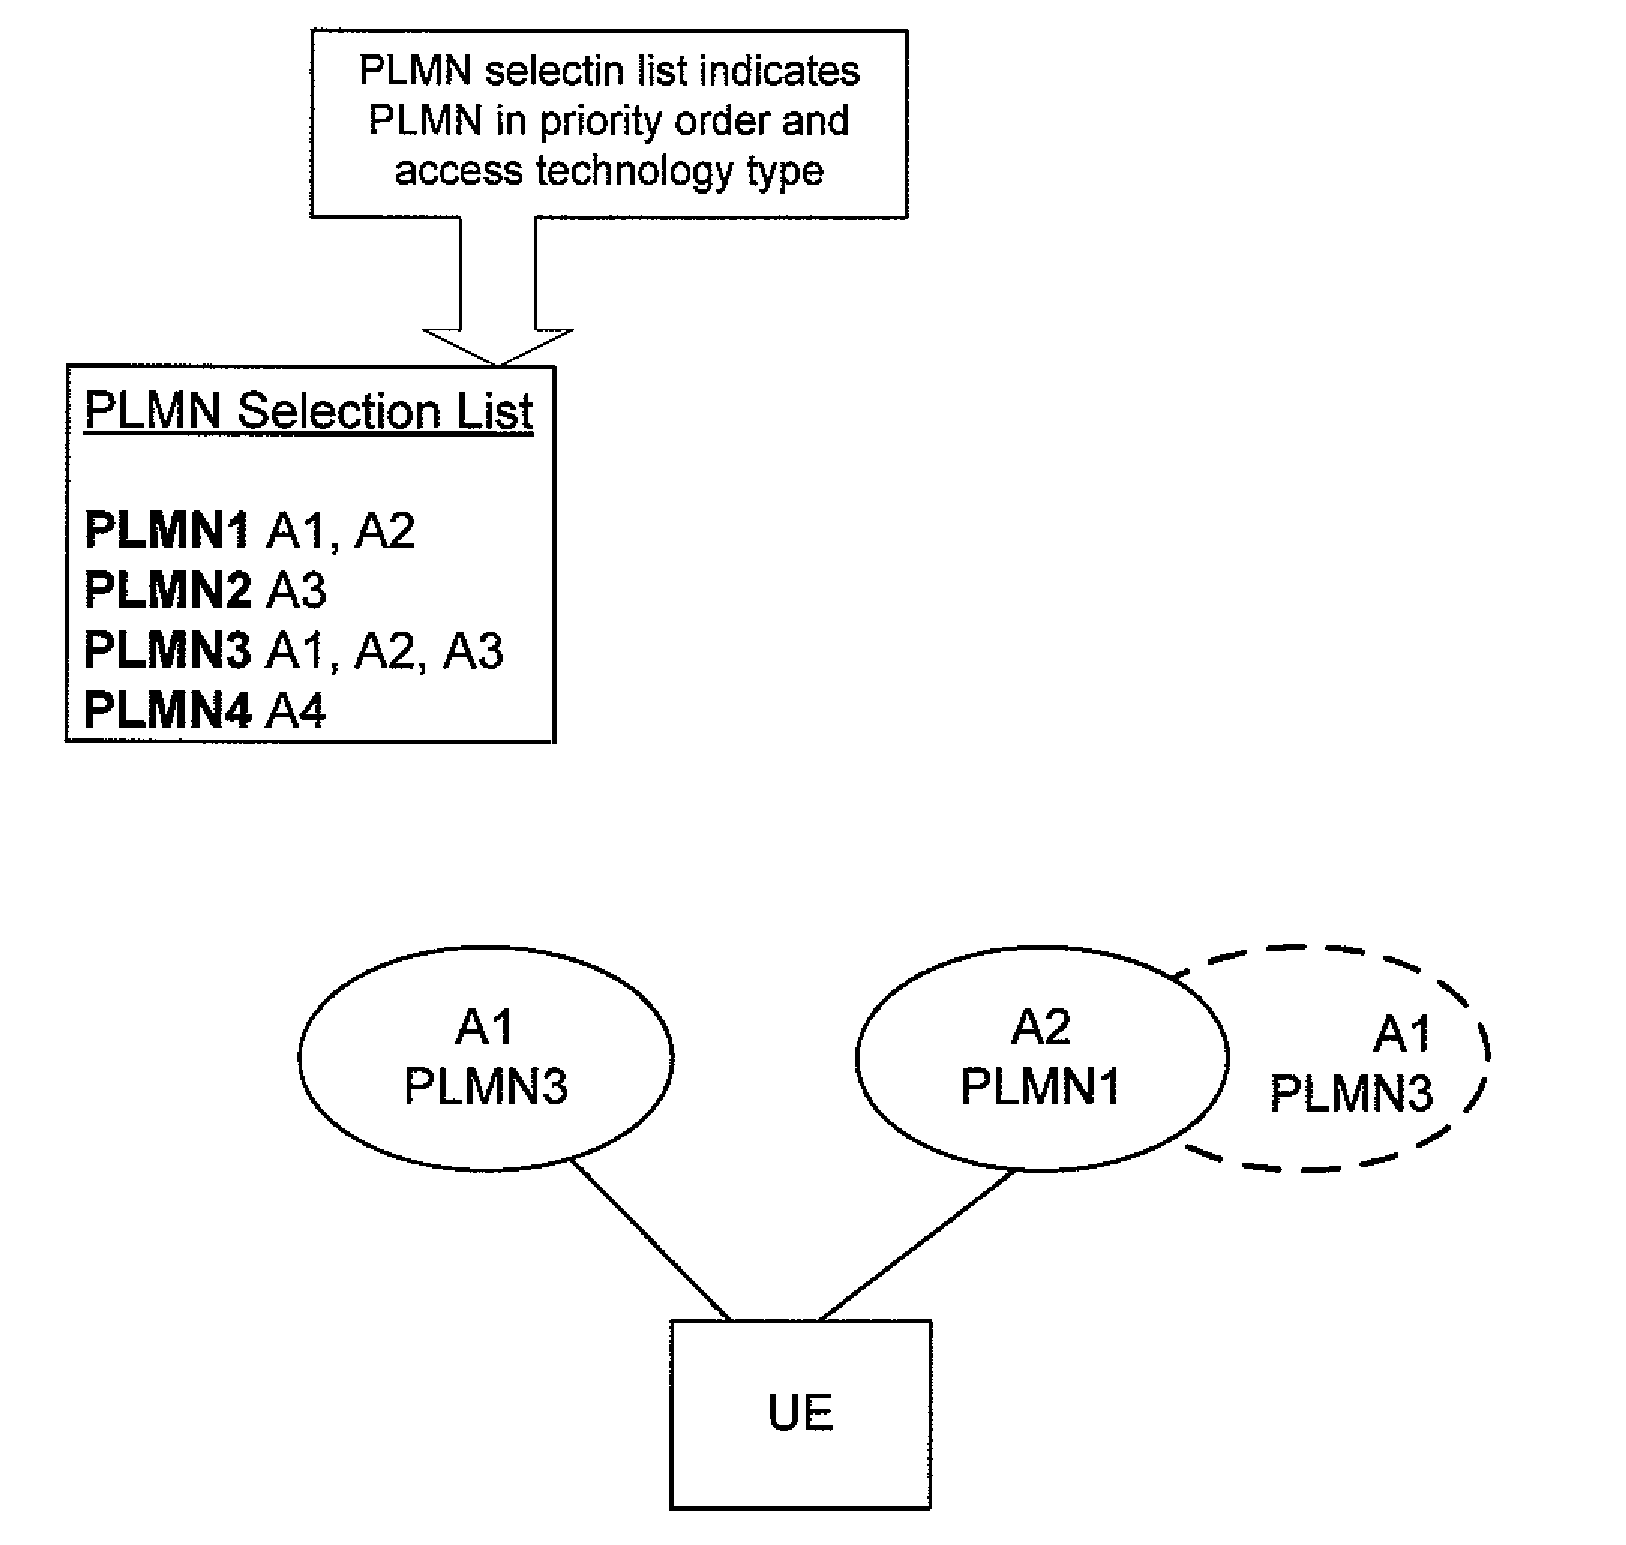 Public land mobile network selection procedures for simultaneous network connectivity through multiple accesses